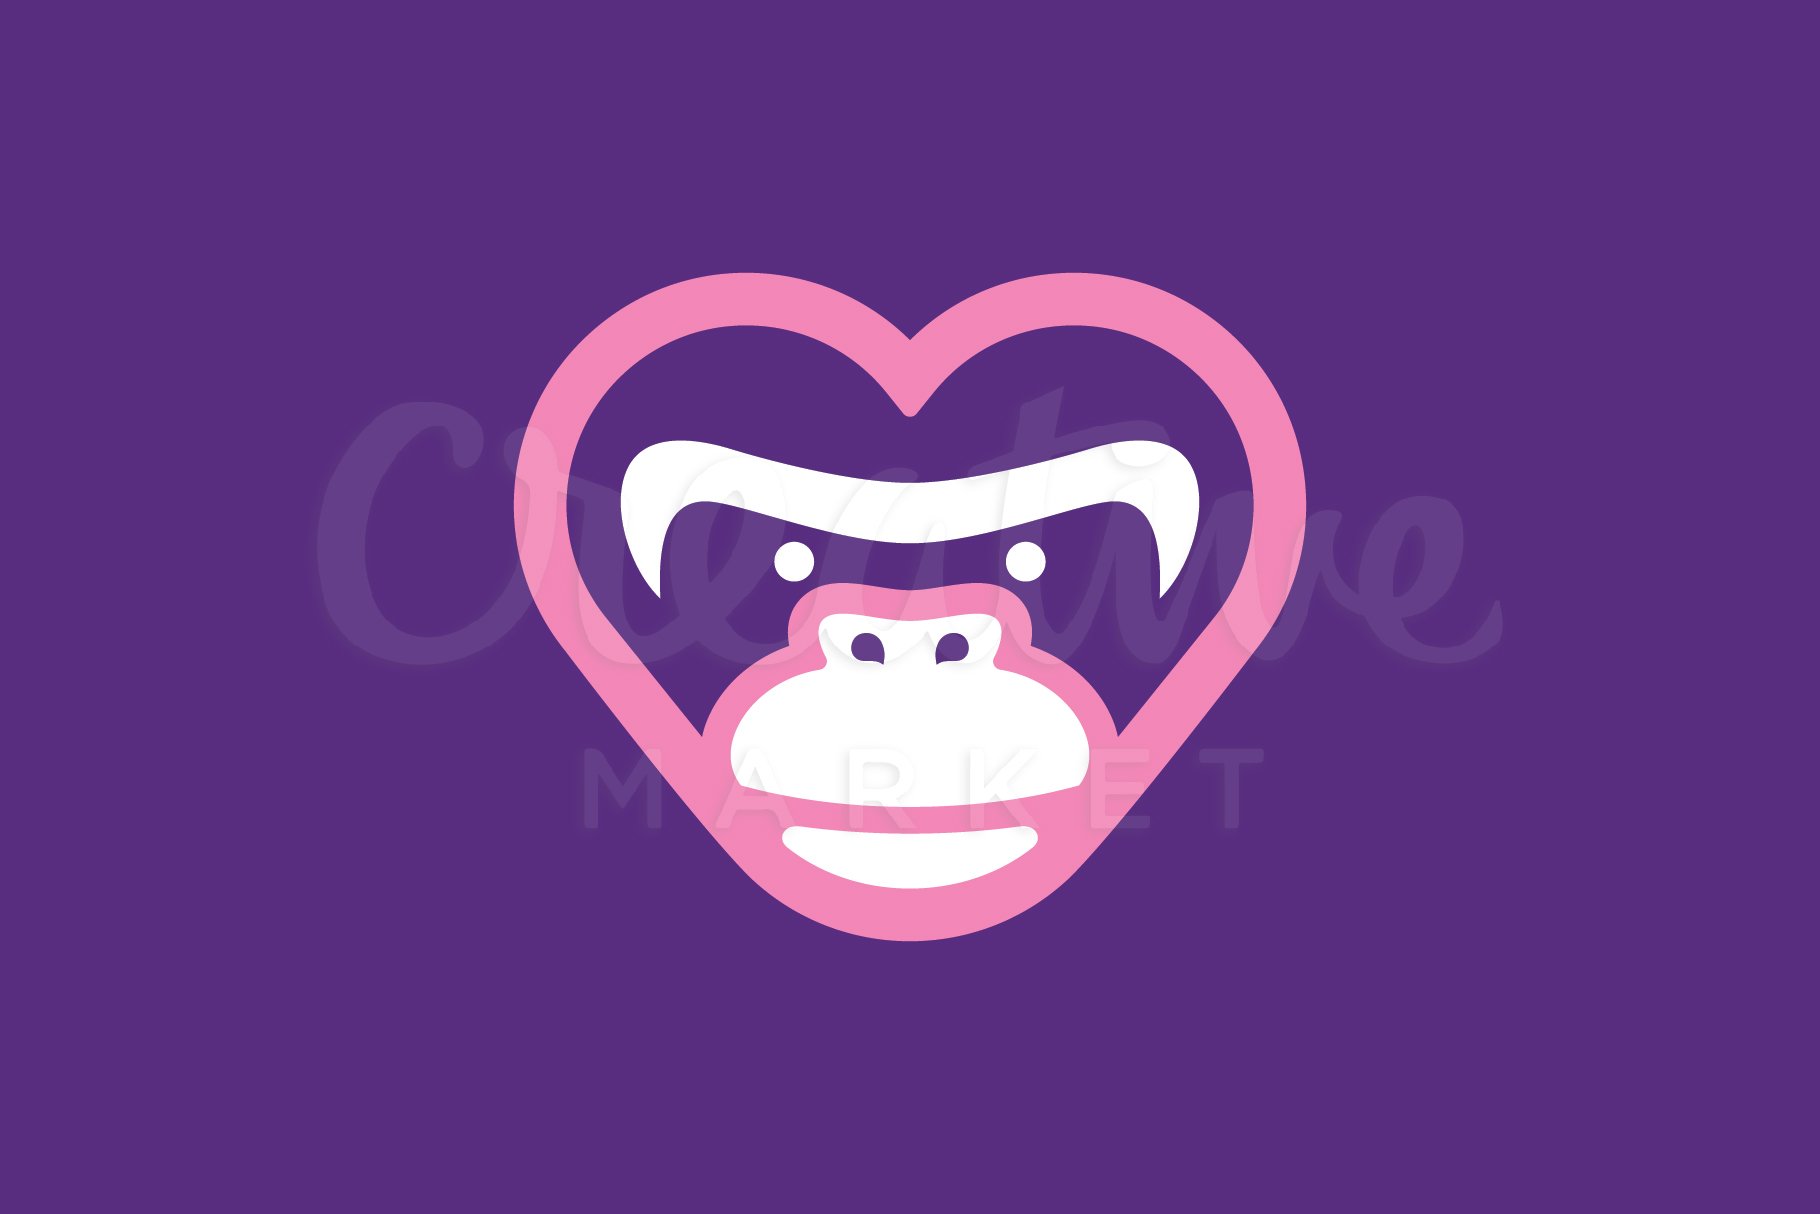 Gorilla Love Logo cover image.